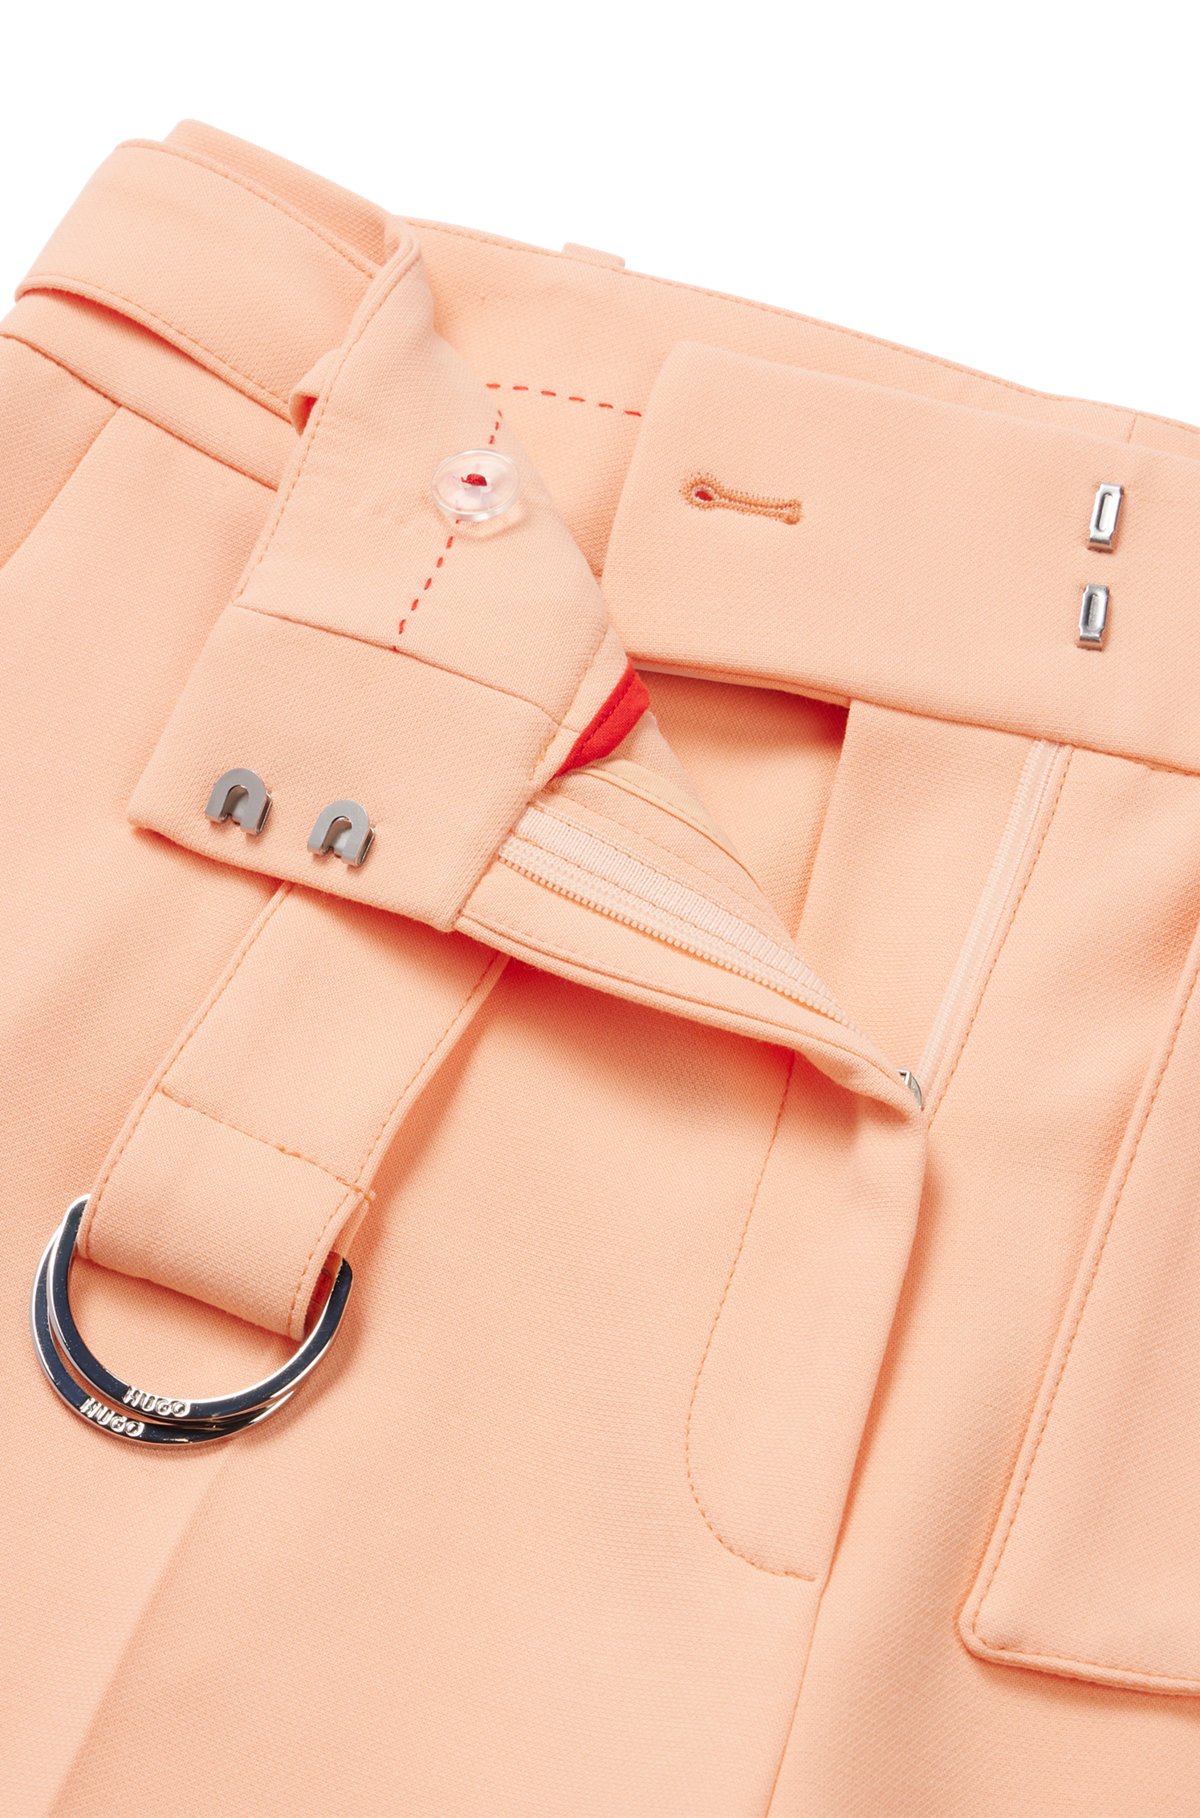 Pantalones regular fit de pernera ancha en tejido elástico, Naranja claro